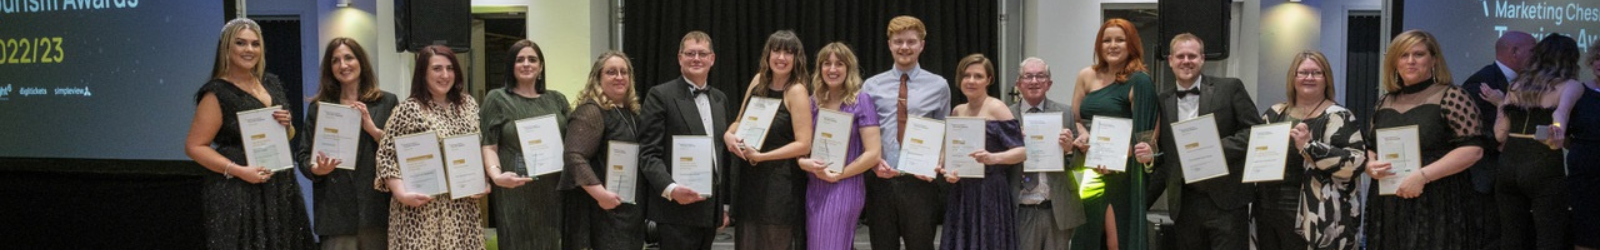 Marketing Cheshire awards